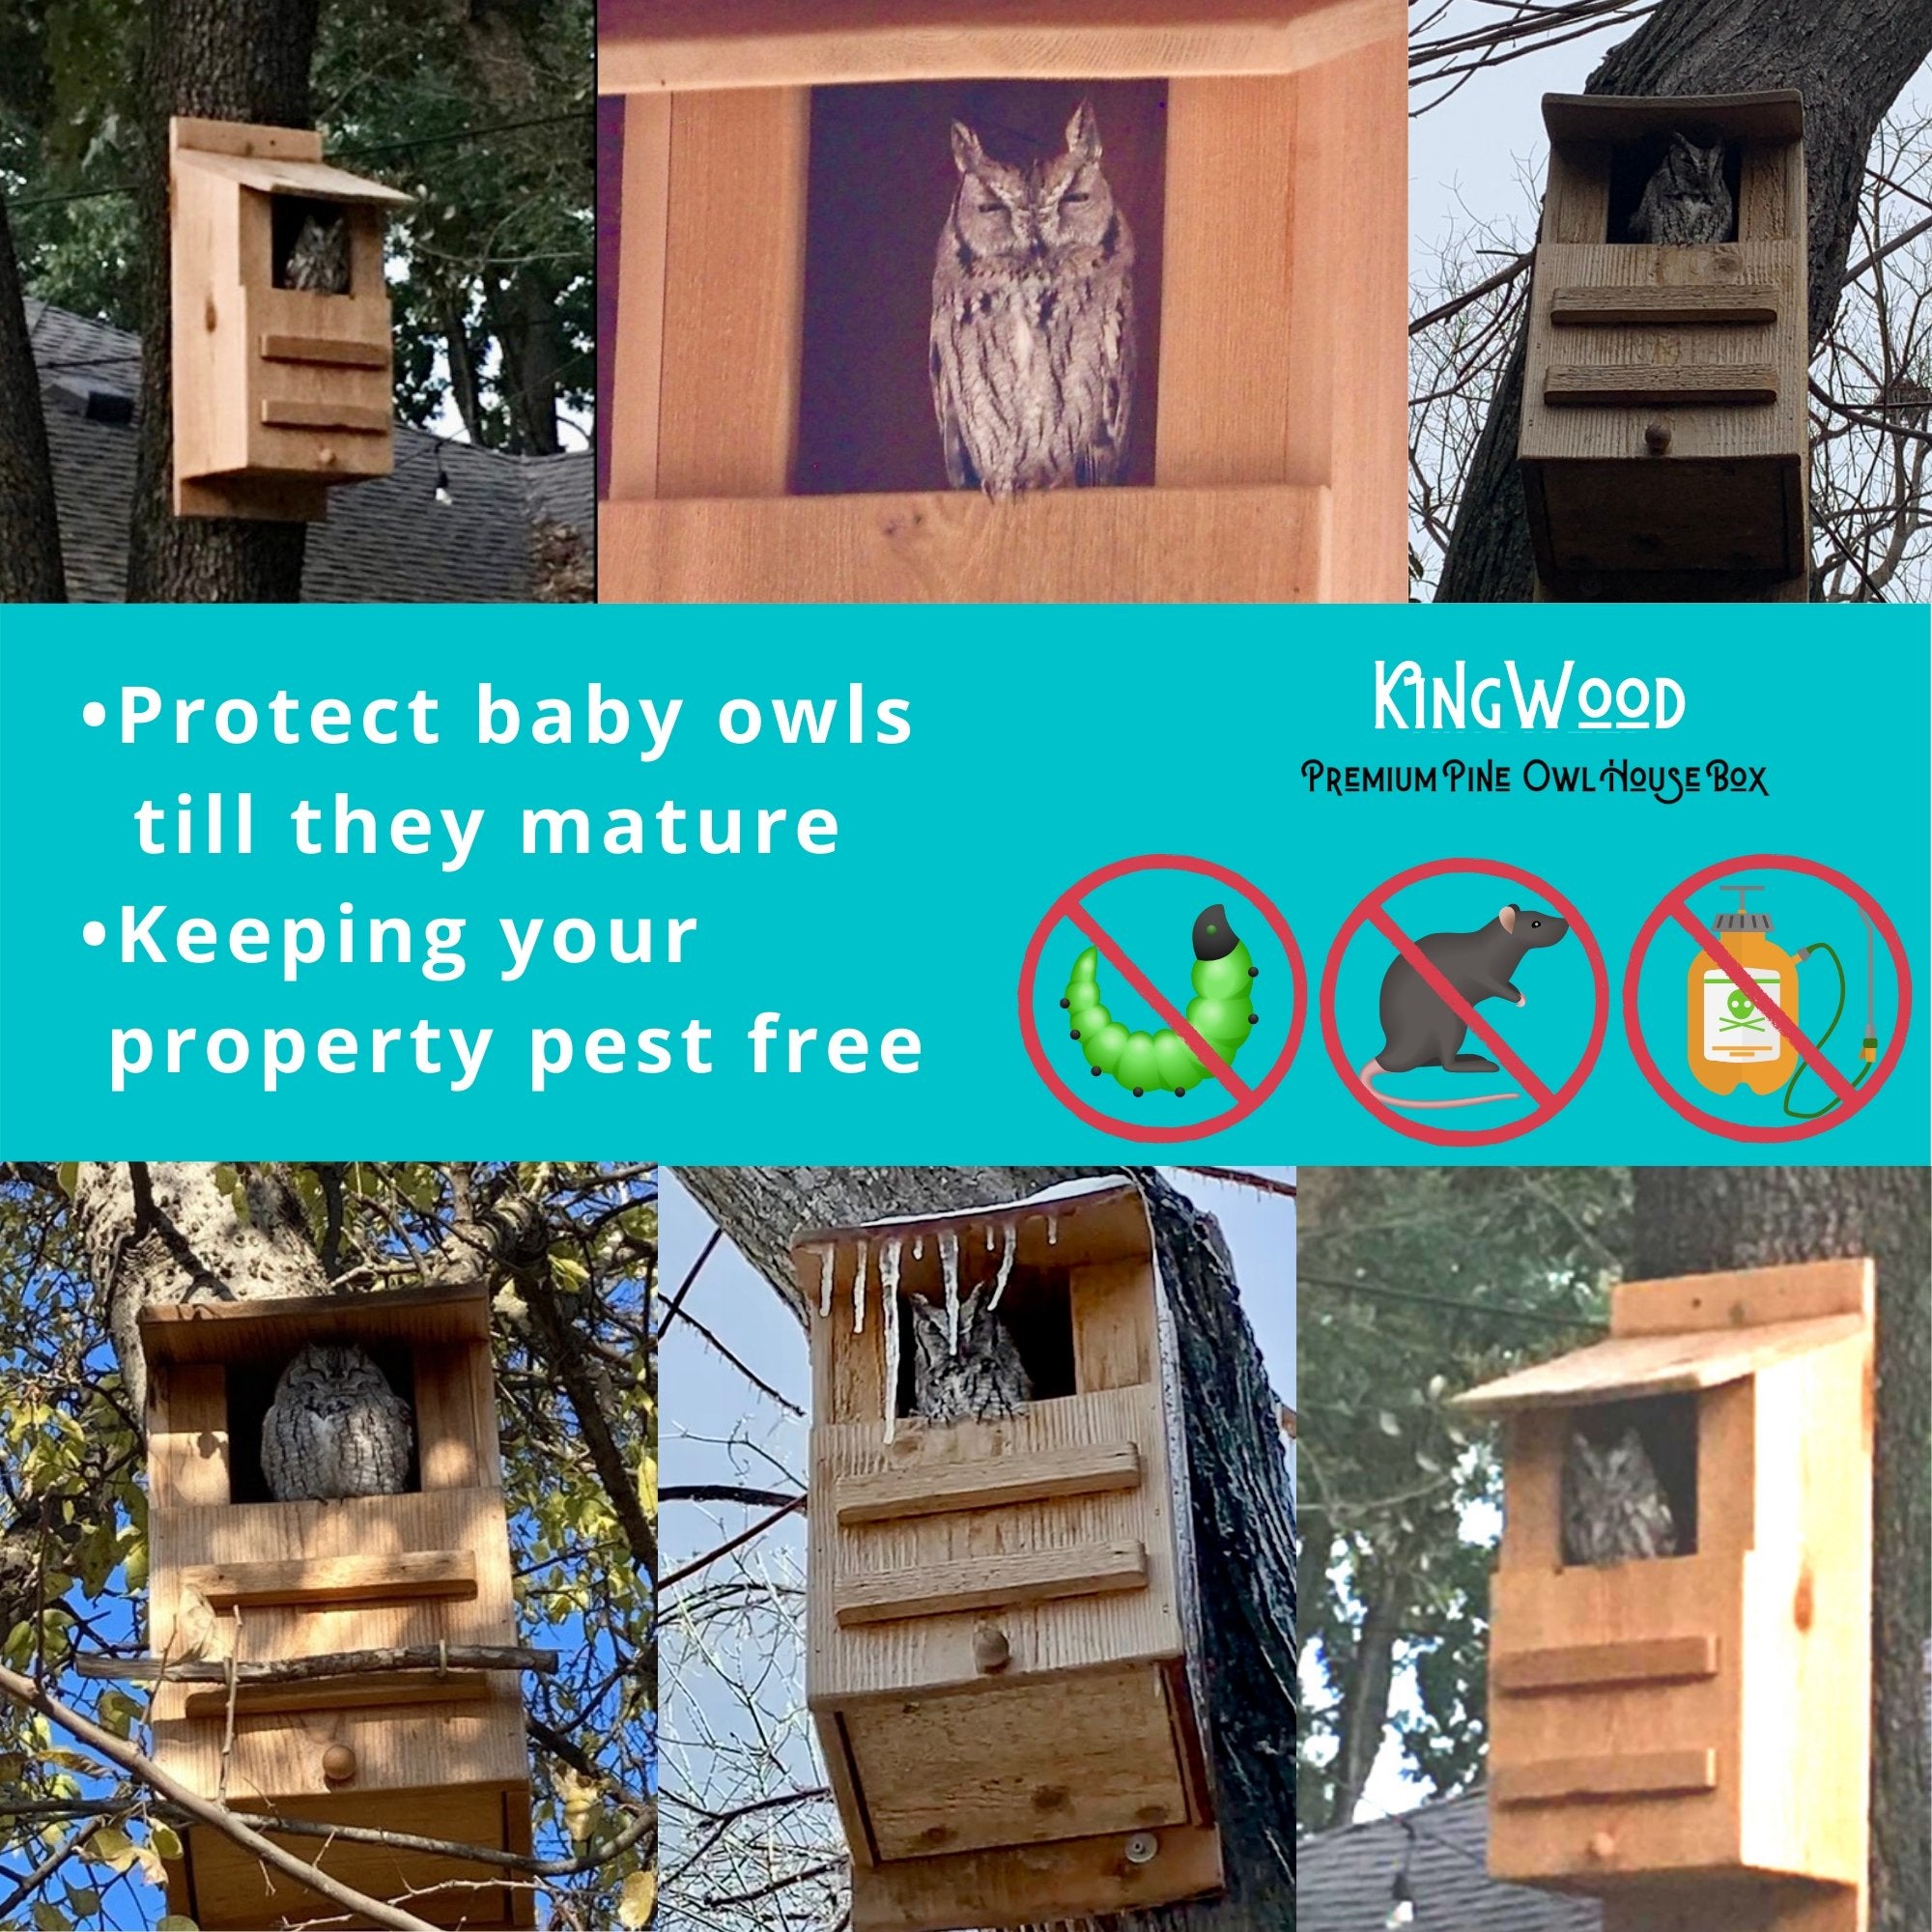 KingWood Premium Pine Owl House Box pest control